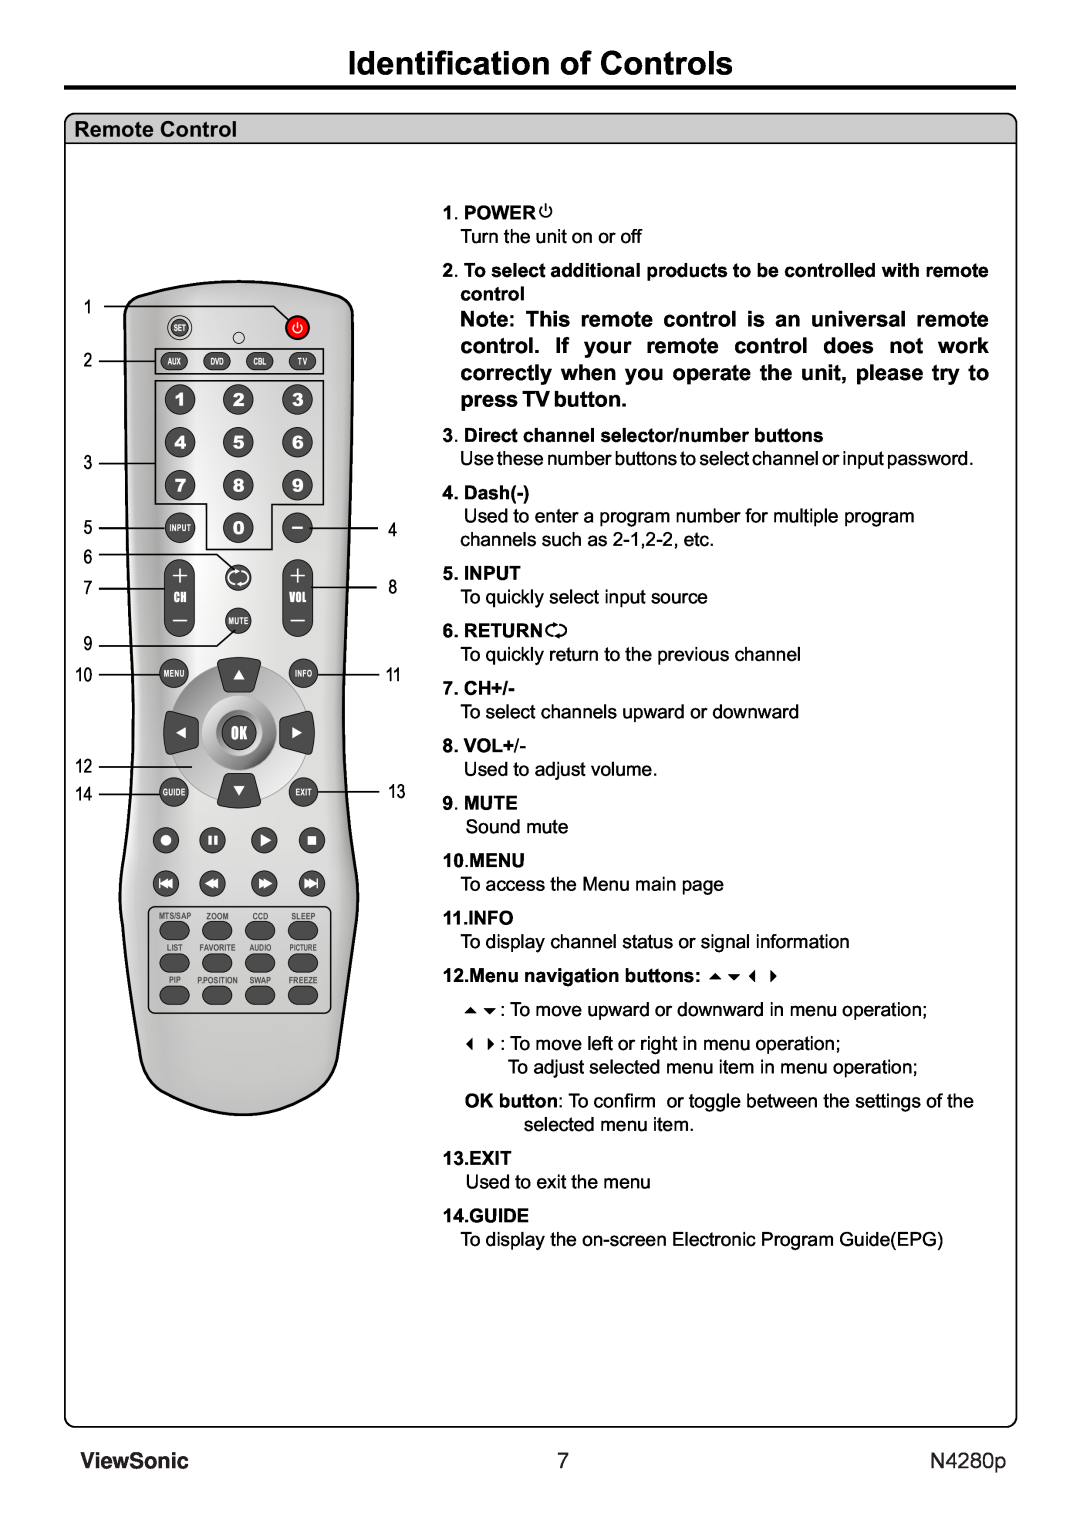 ViewSonic N4280p manual Identification of Controls, Remote Control, ViewSonic 